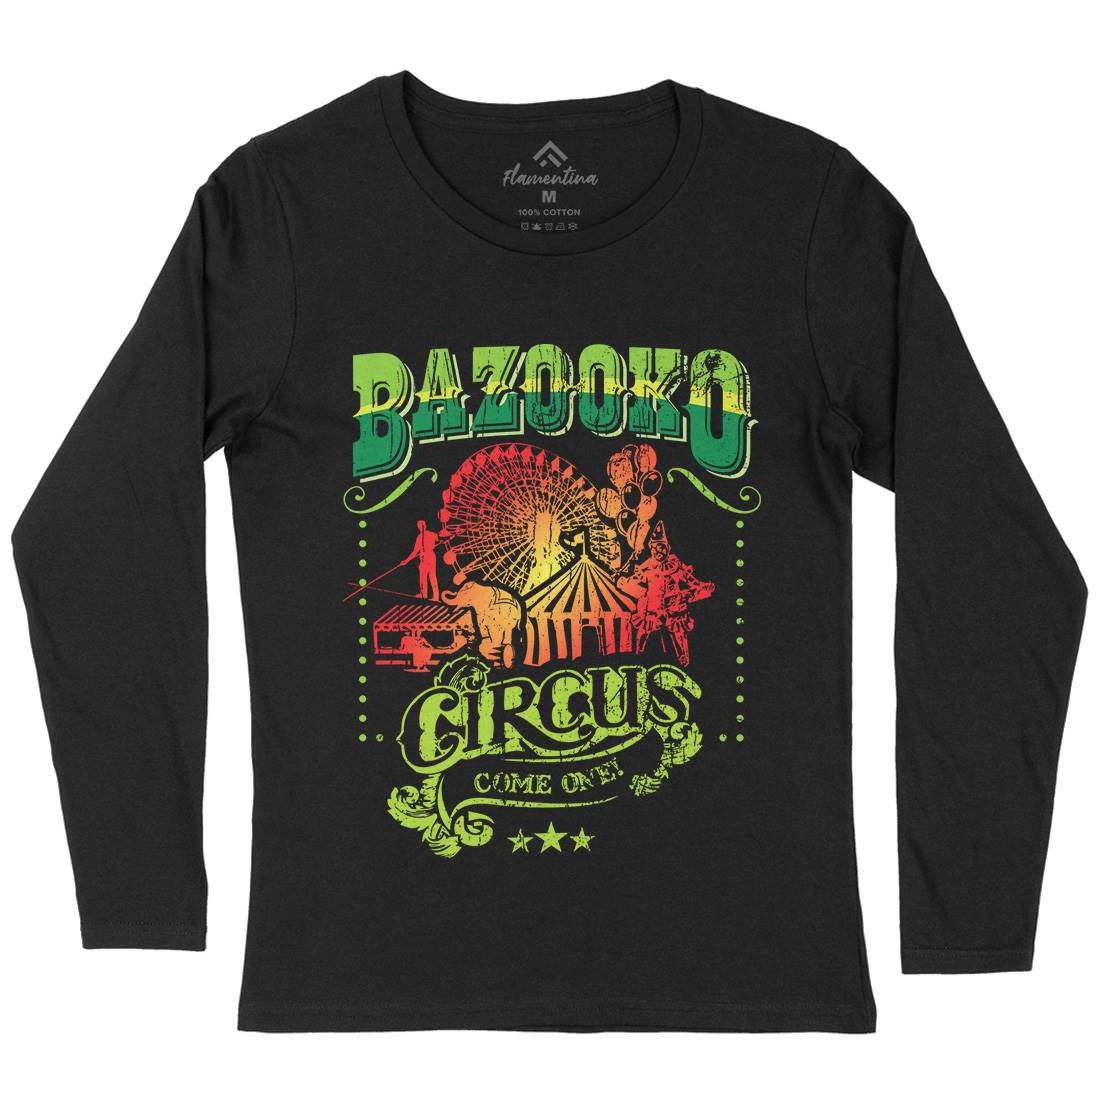 Bazookos Circus Womens Long Sleeve T-Shirt Retro D254